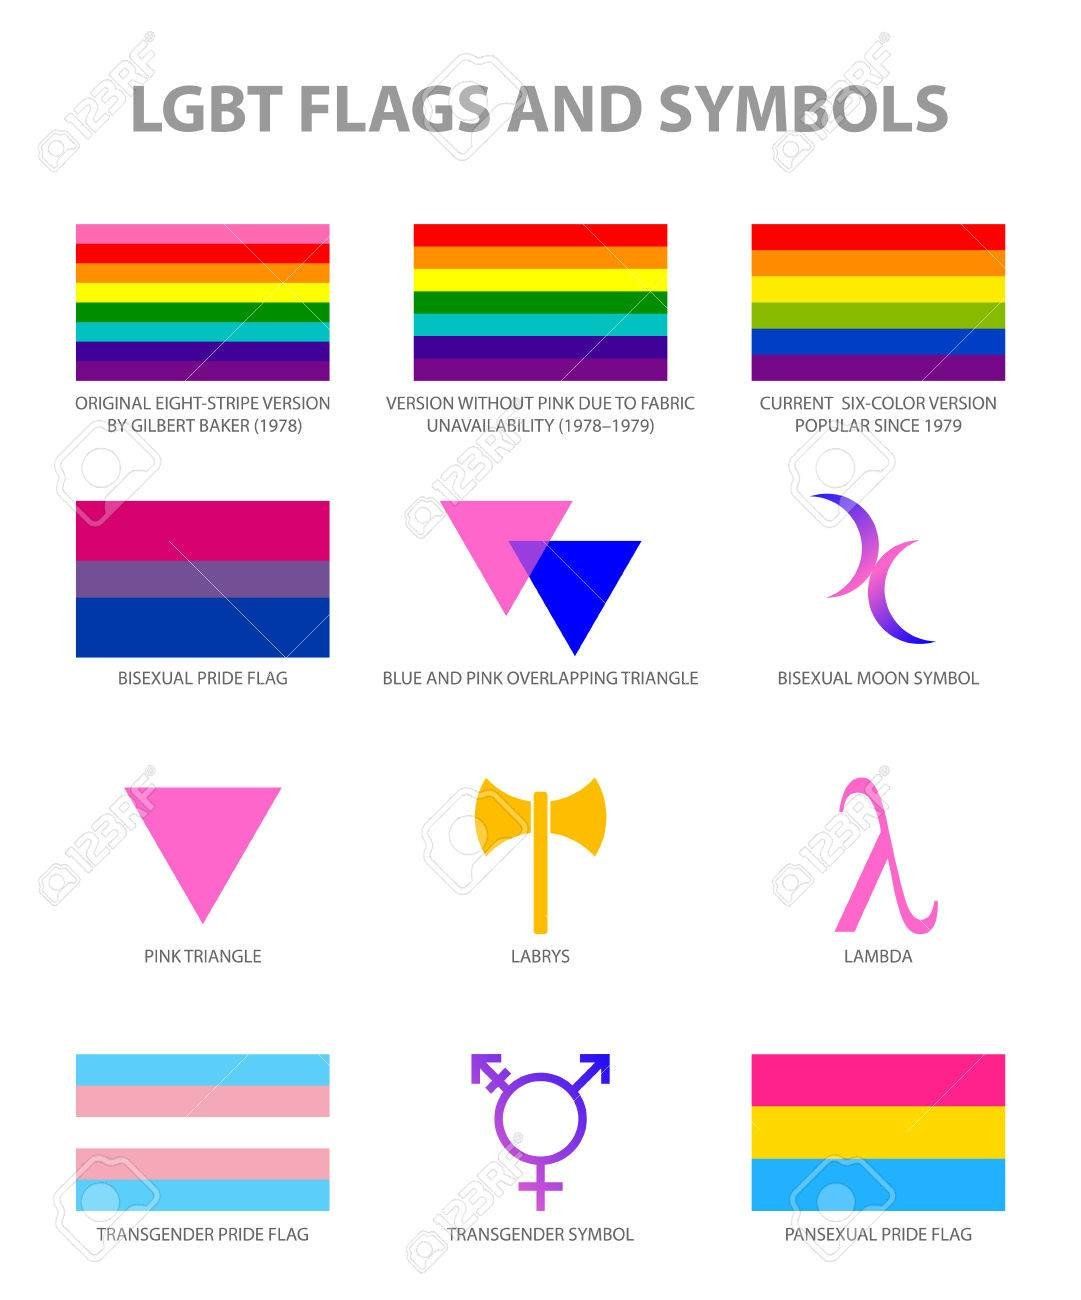 Pigtail reccomend Bisexual moon symbol